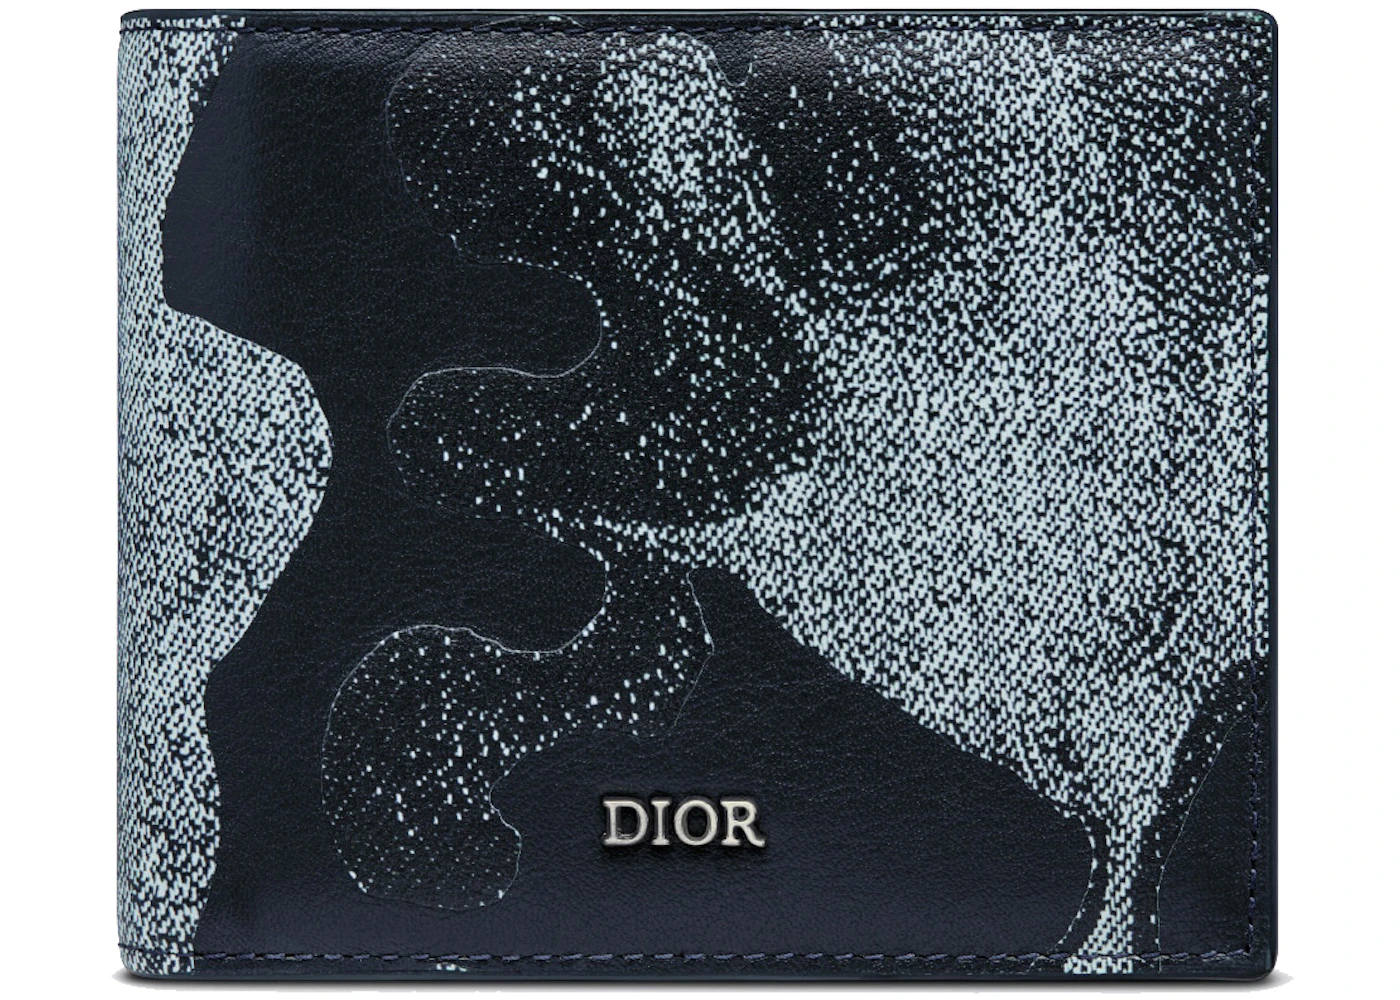 Dior x Kaws Bifold Wallet Yellow Bees Black in Calfskin - US